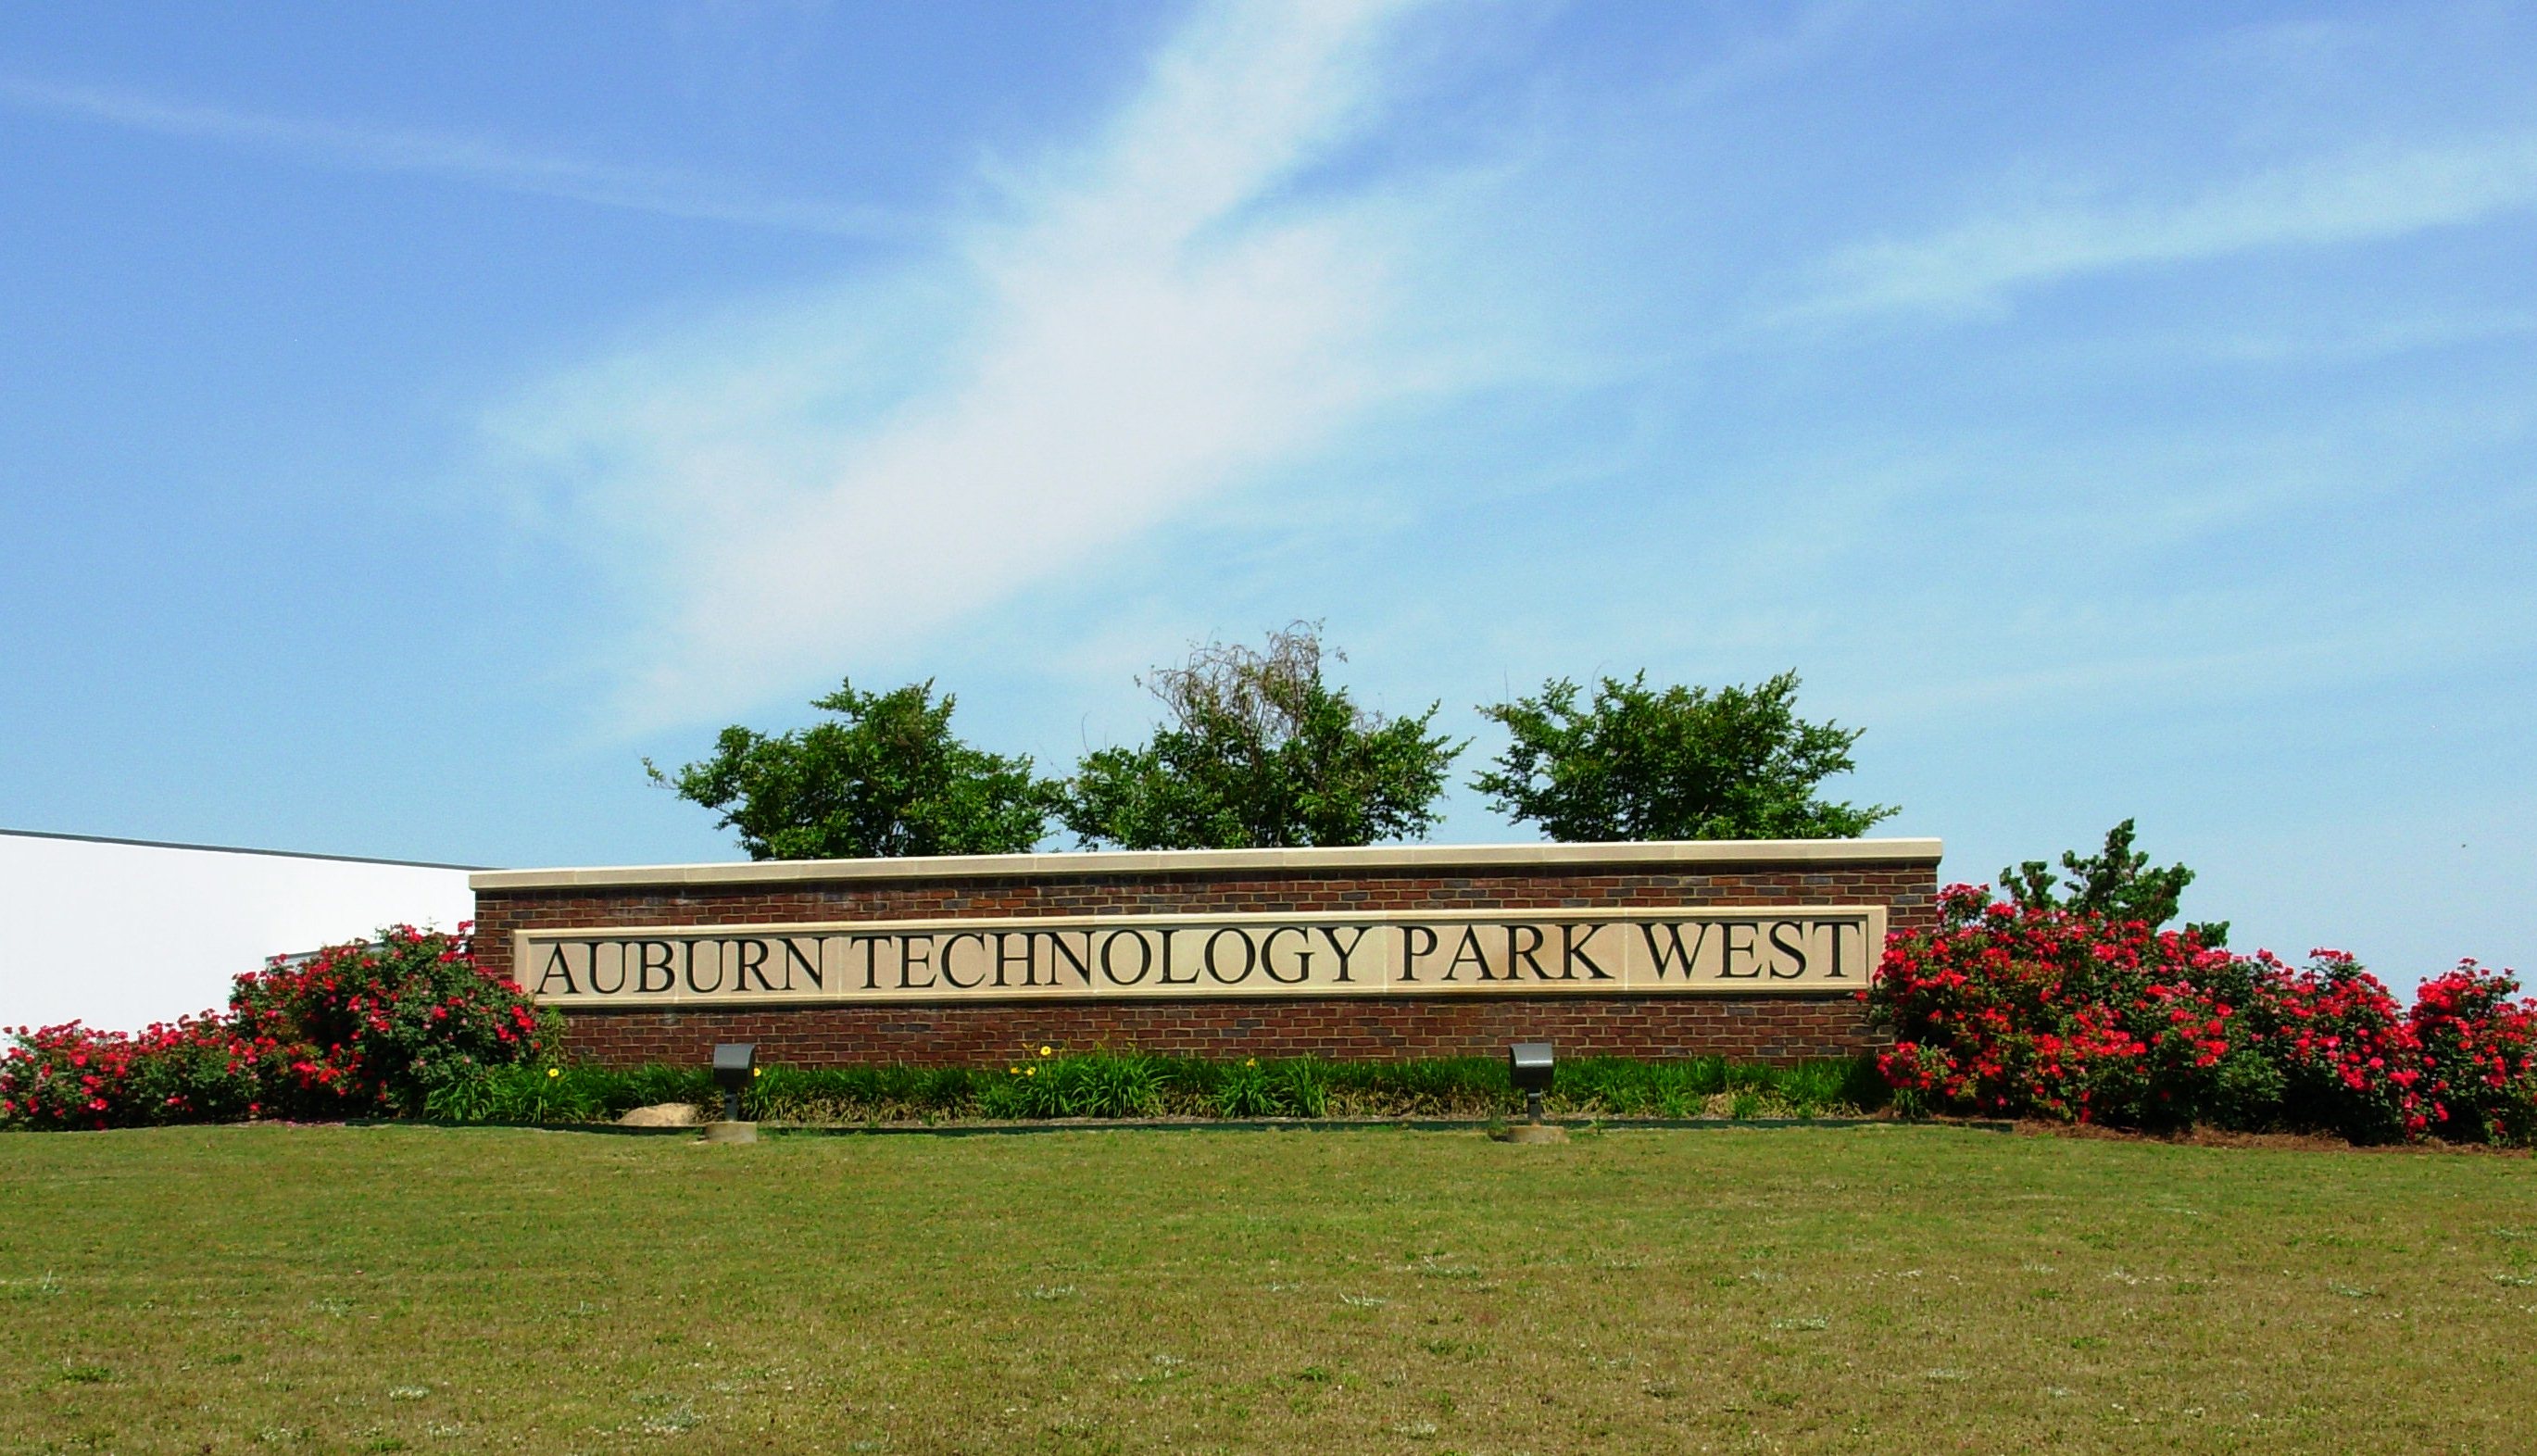 Auburn Technology Park West